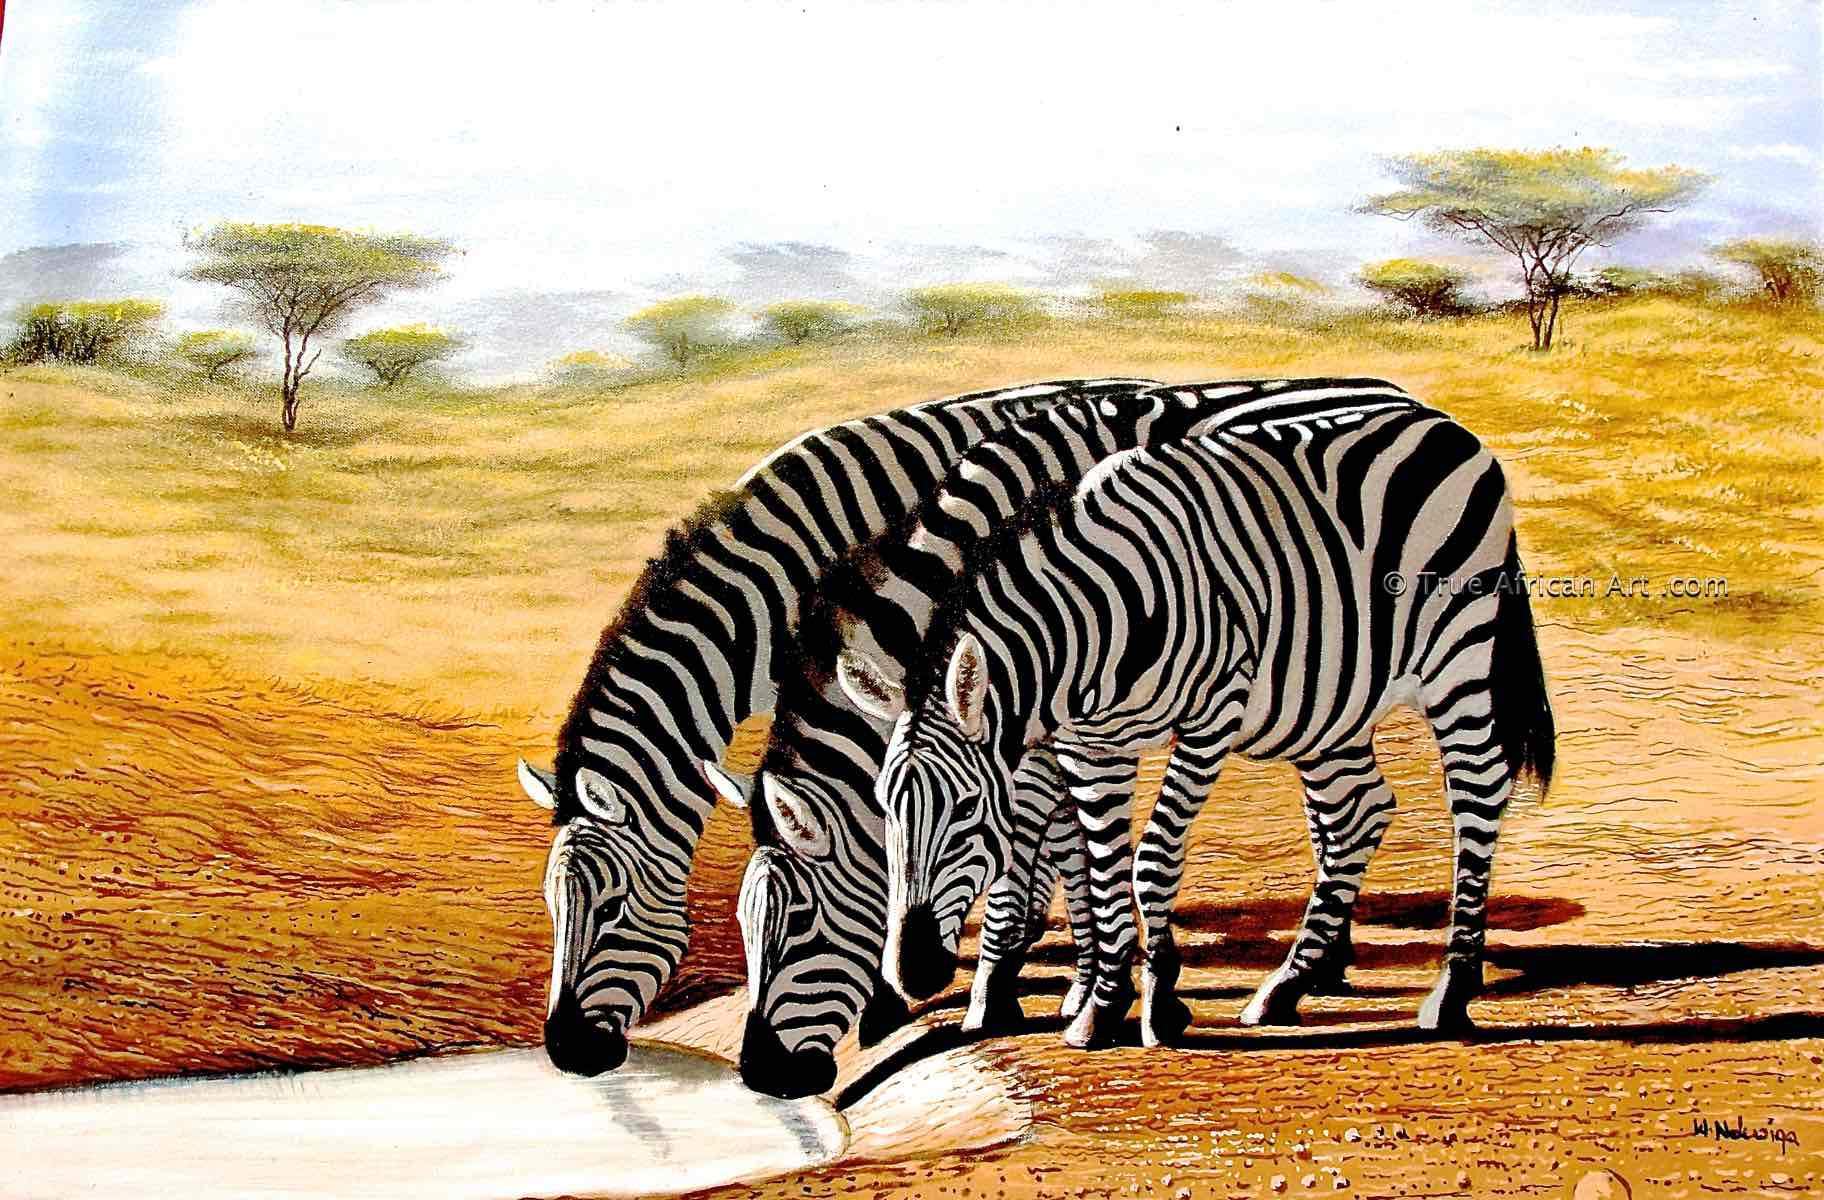 Wycliffe Ndwiga  |  Kenya  |  Zebras Drinking  |  Print  |  True African Art .com